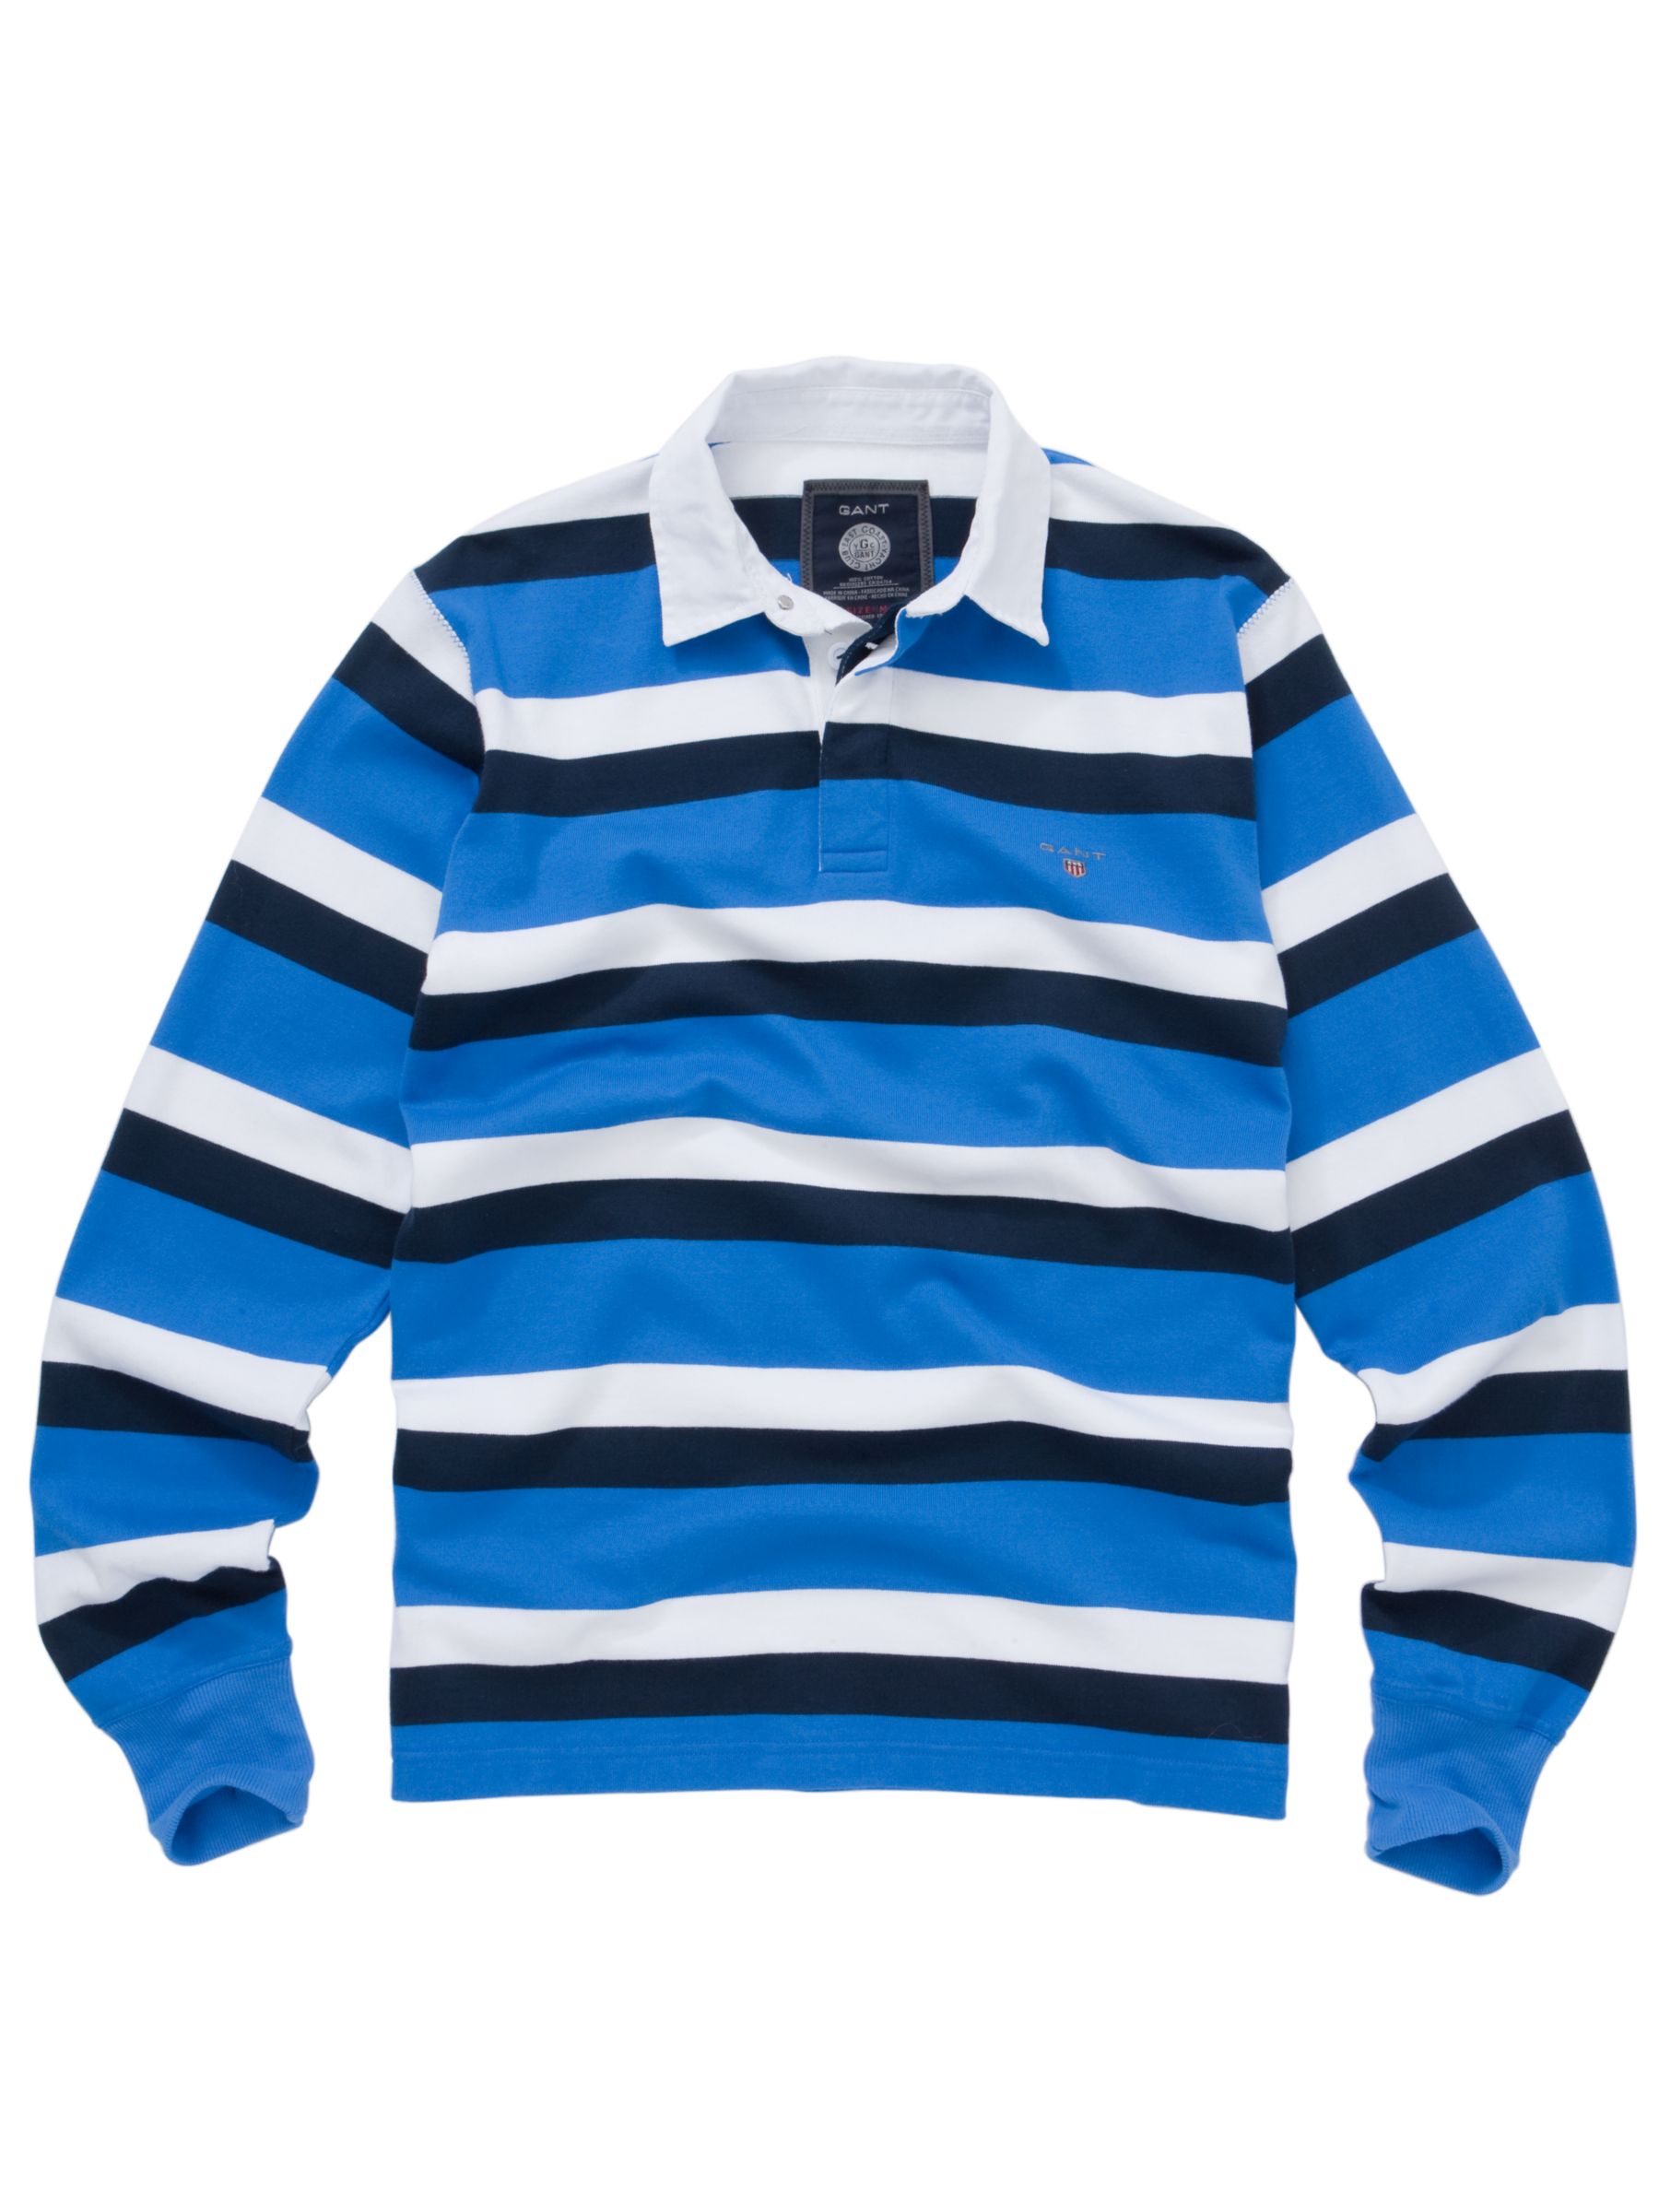 Gant Multi Bar Stripe Rugby Shirt, Iris Blue